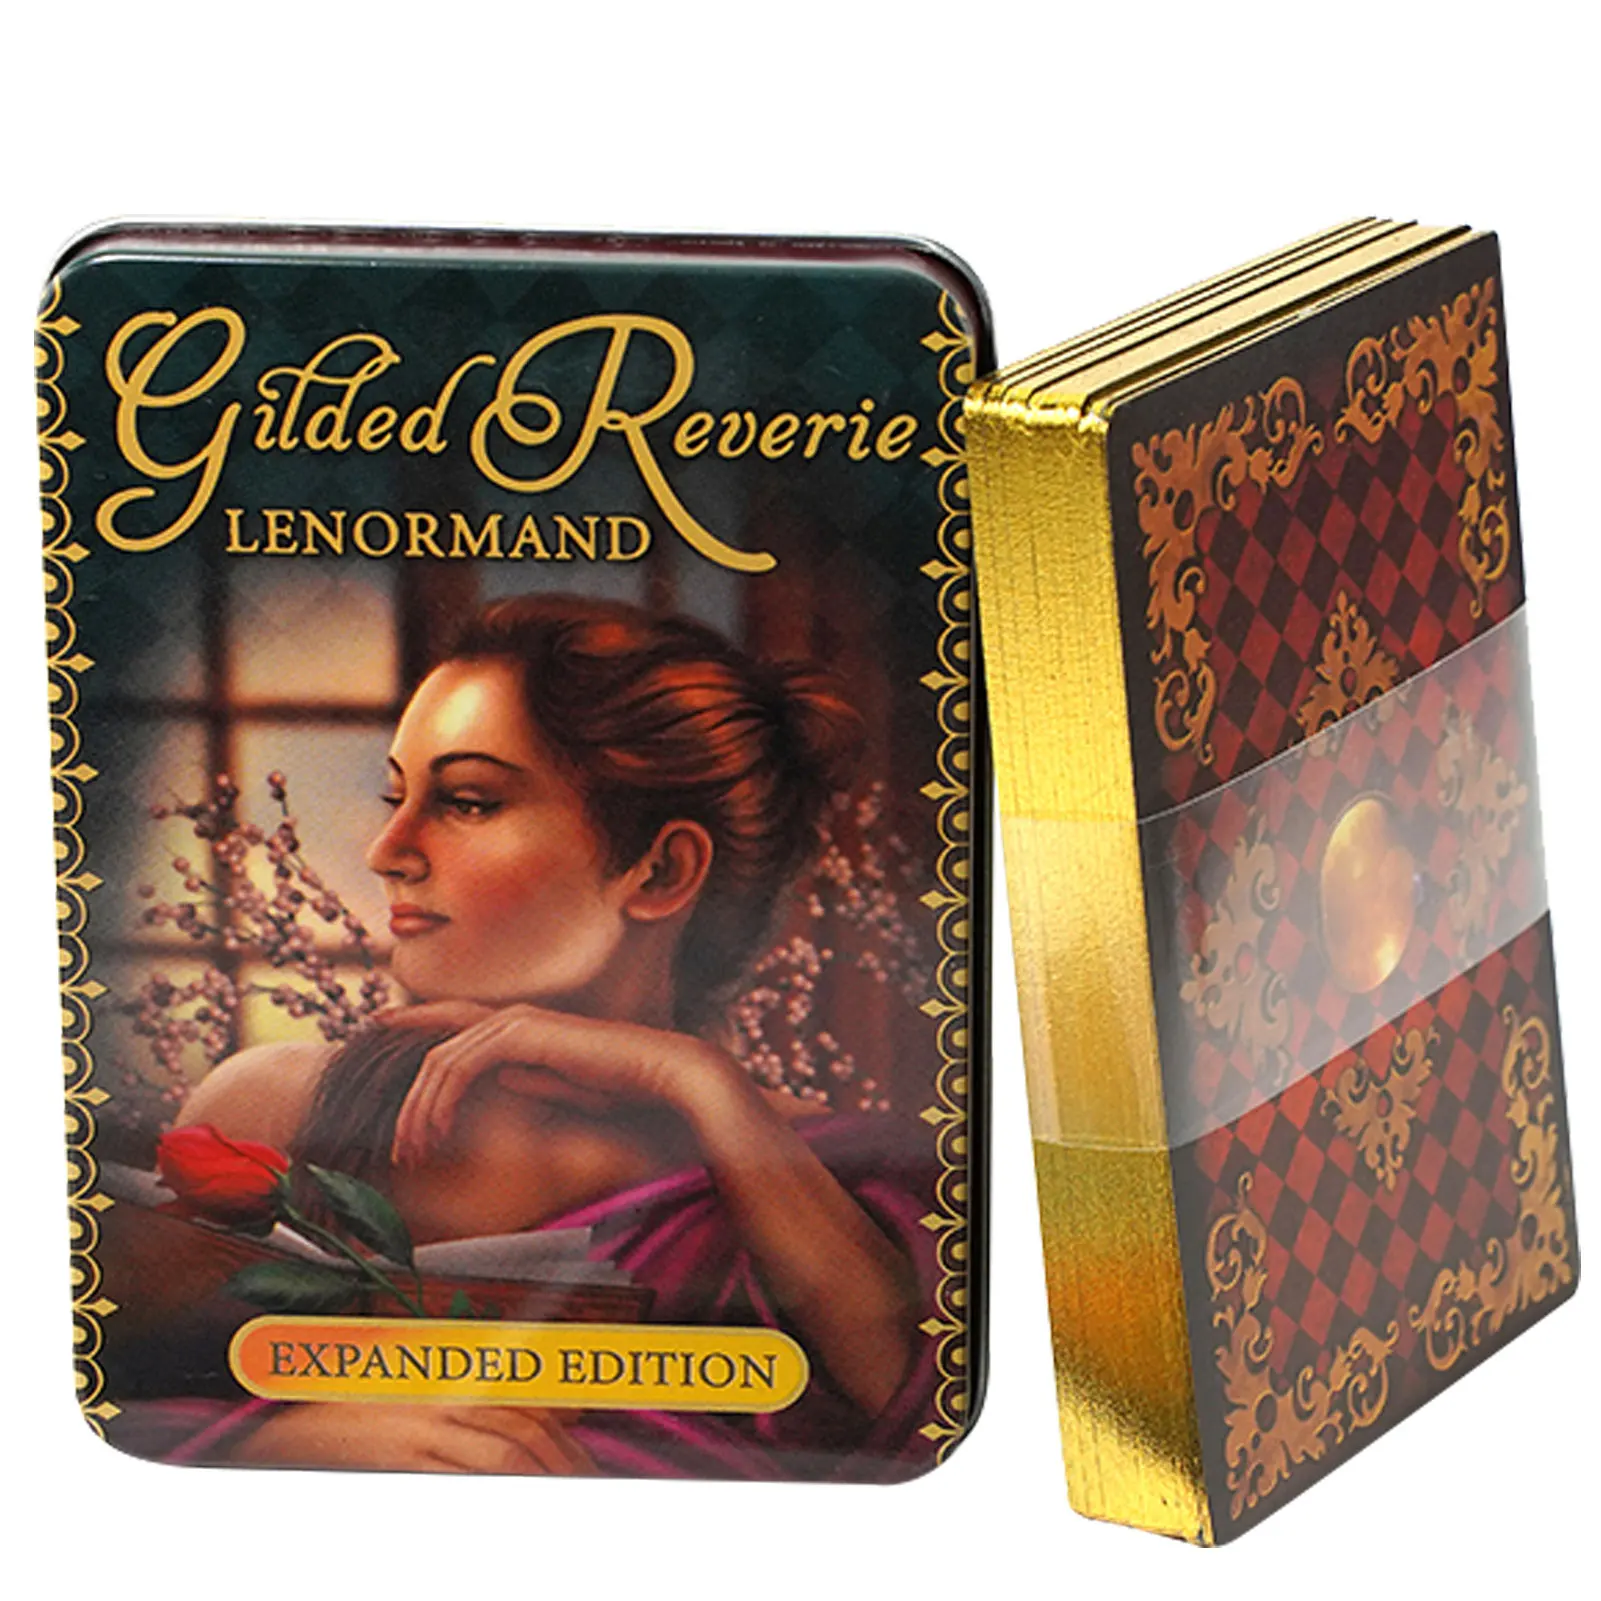 

44 Pcs Gilded Reverie Lenormand Tarot Card 44 Pcs The Romance Angels Tarot Radiant Rider Tarot Cards The Modern Witch Tarot Deck